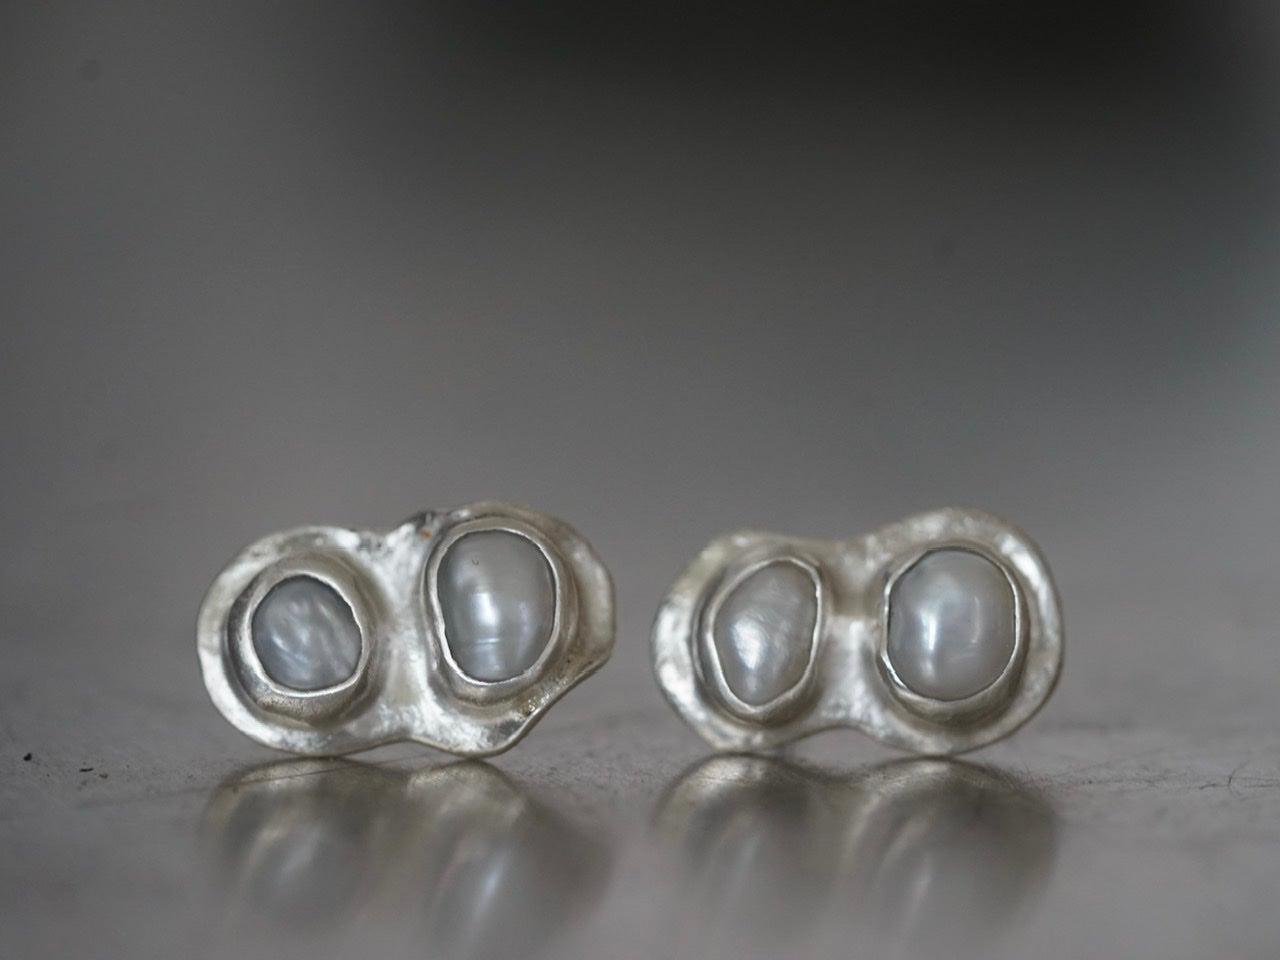 Organic pearl post earrings, small